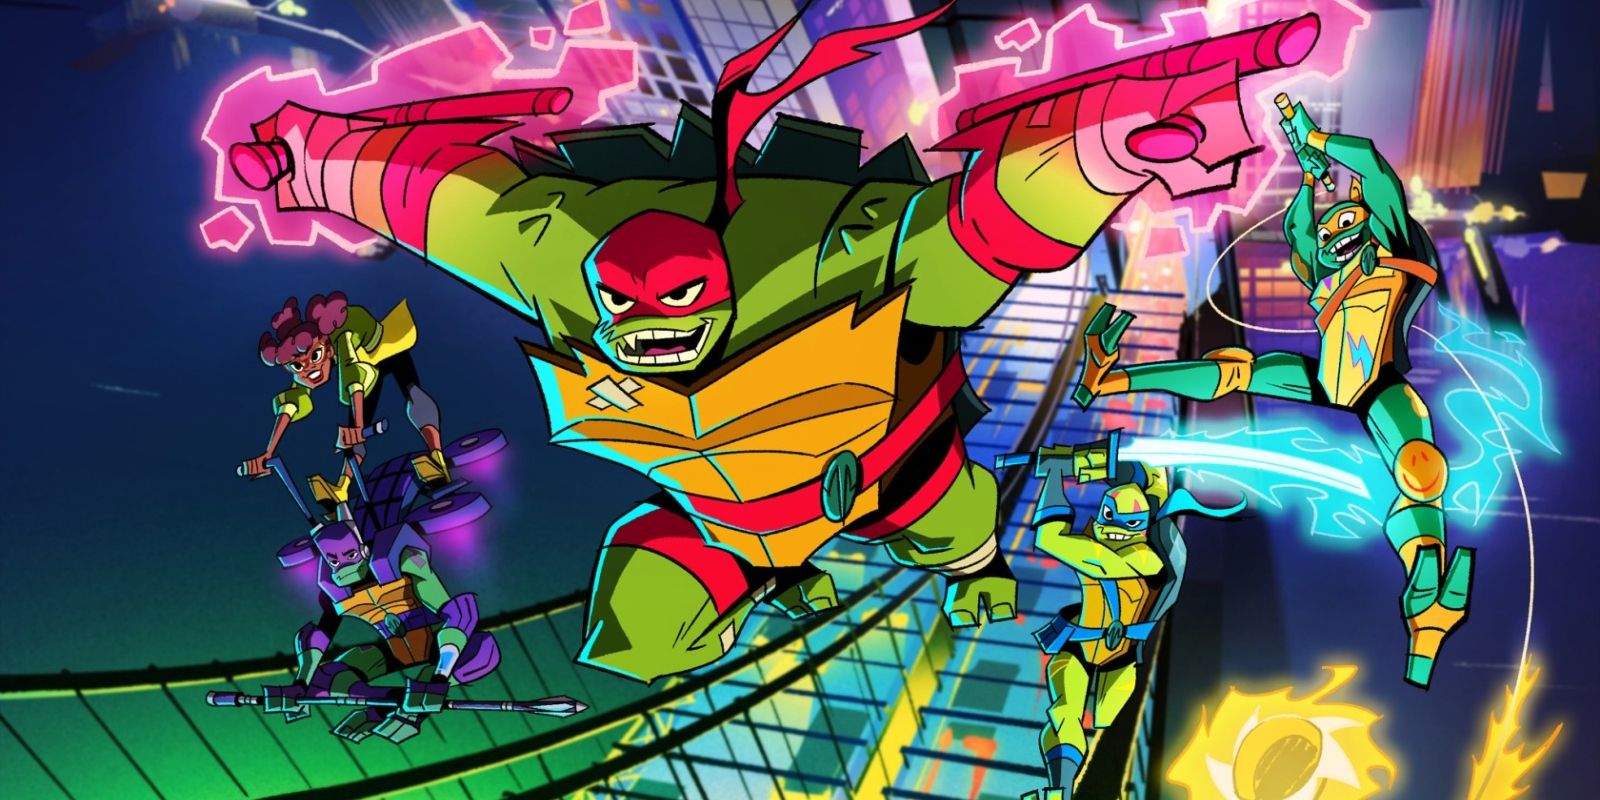 Rise Of The Teenage Mutant Ninja Turtles Is A Weak Animated Reboot